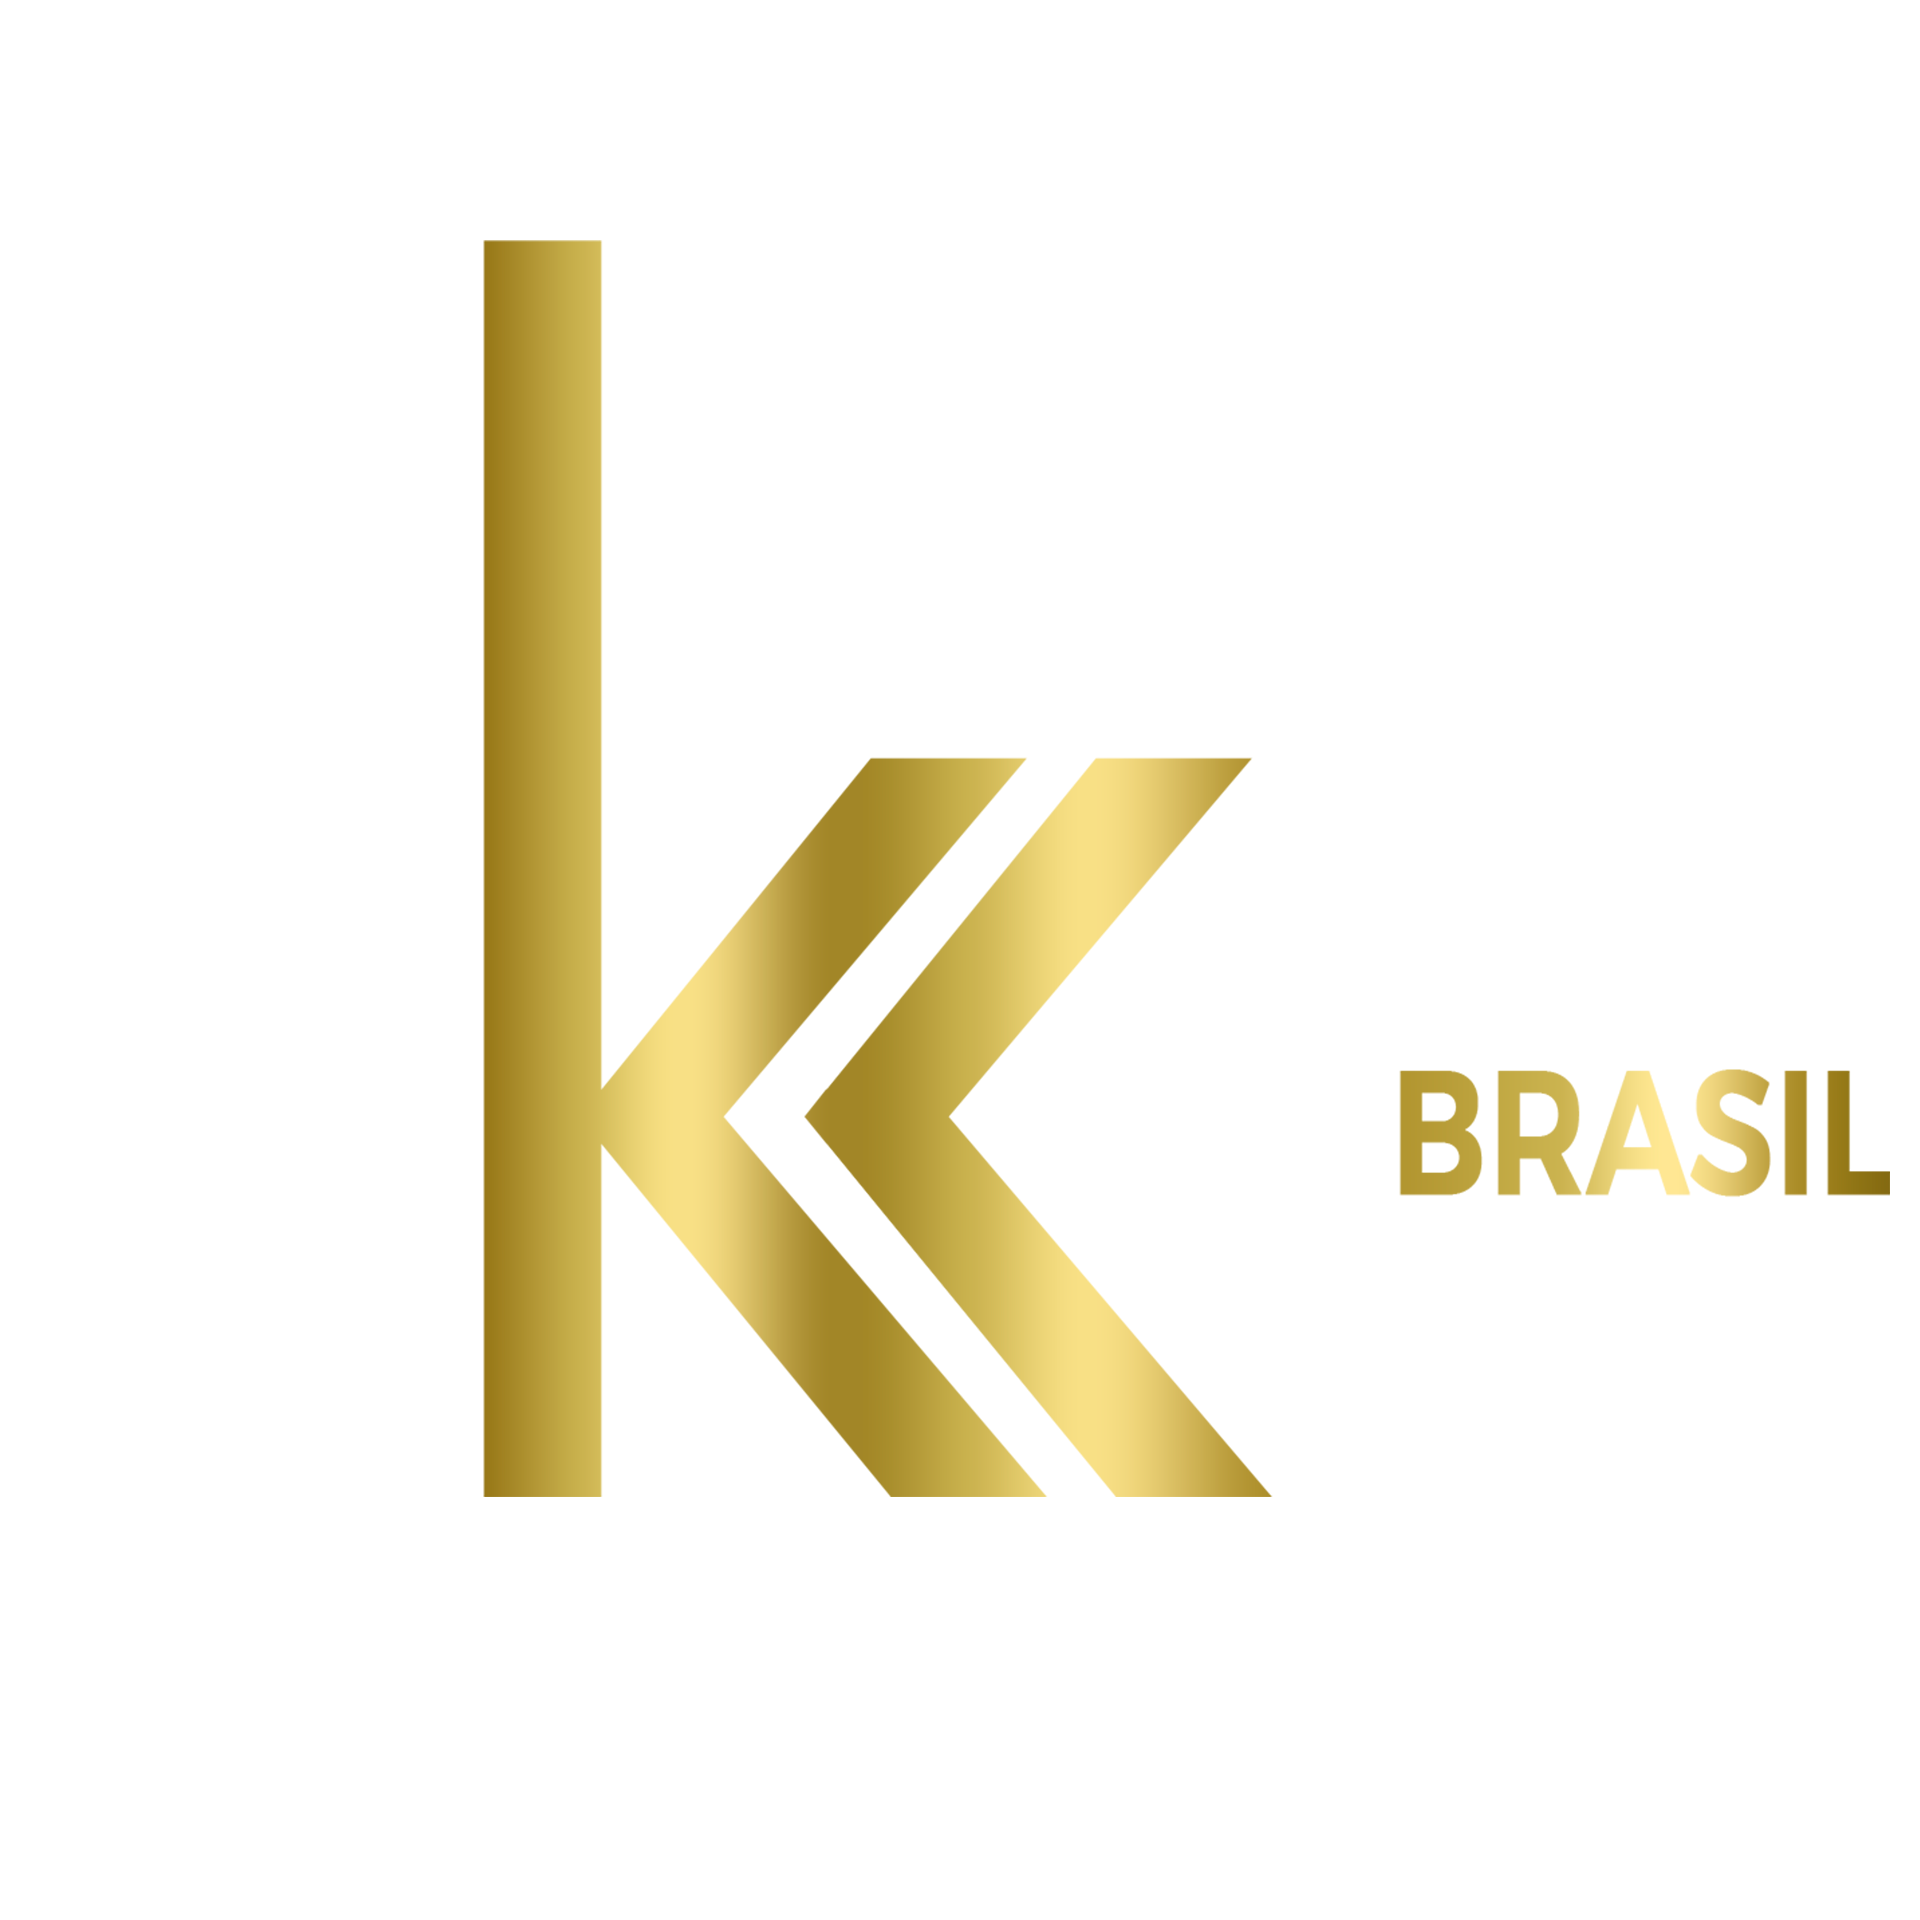 EKKO BRASIL COSMETICOS PROFISSIONAIS